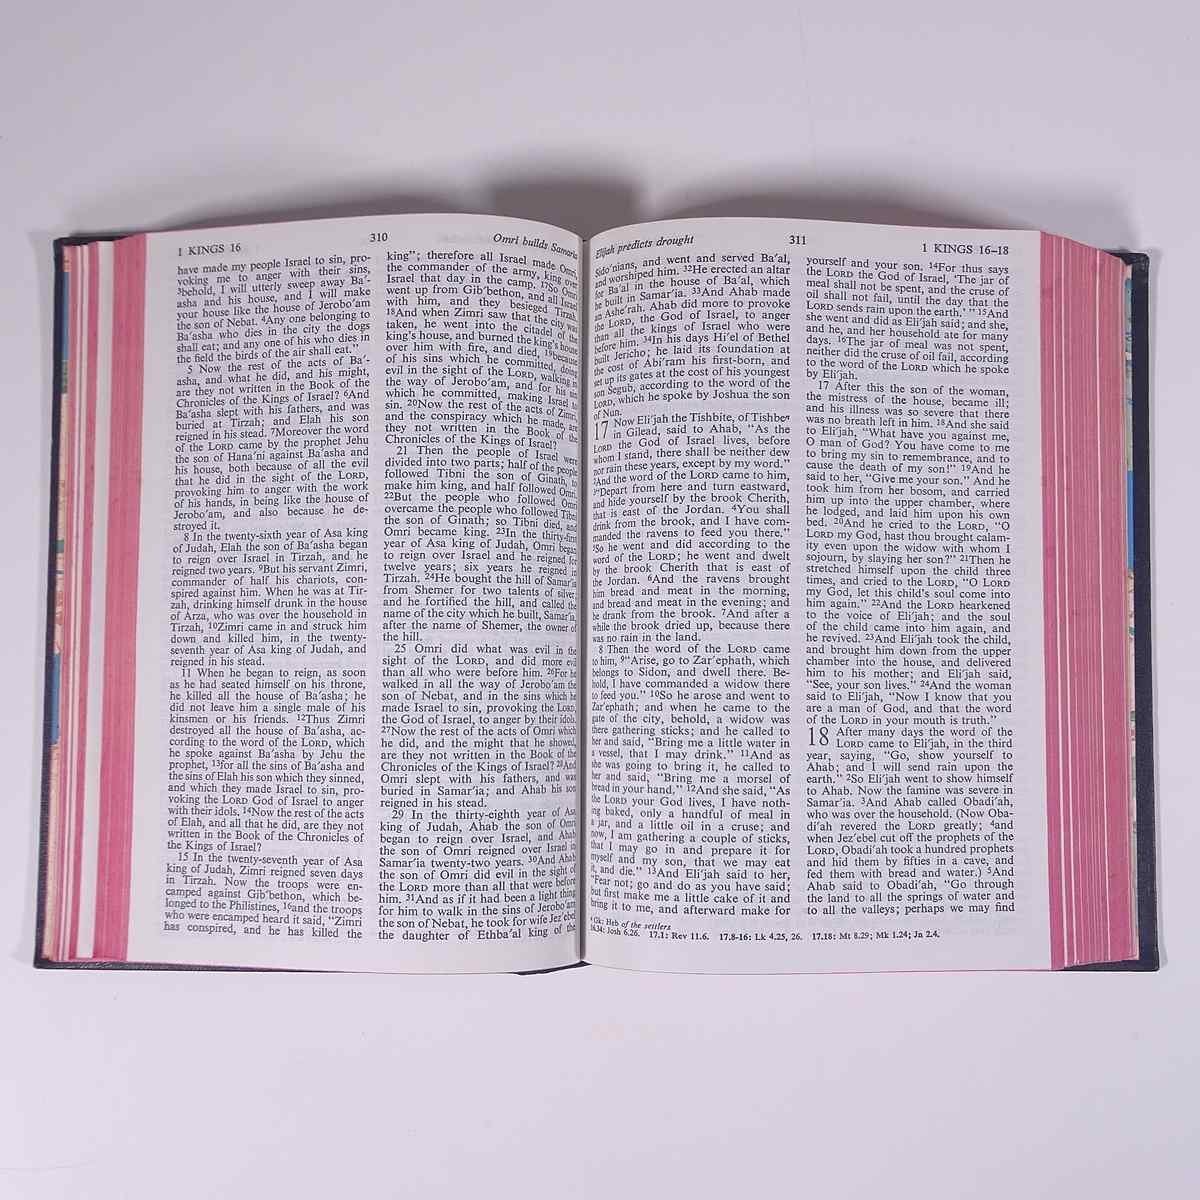 【英語洋書】 THE BIBLE 旧約聖書 新約聖書 REVISED STANDARD VERSION 改訂標準版 1971 単行本 キリスト教 聖書_画像9